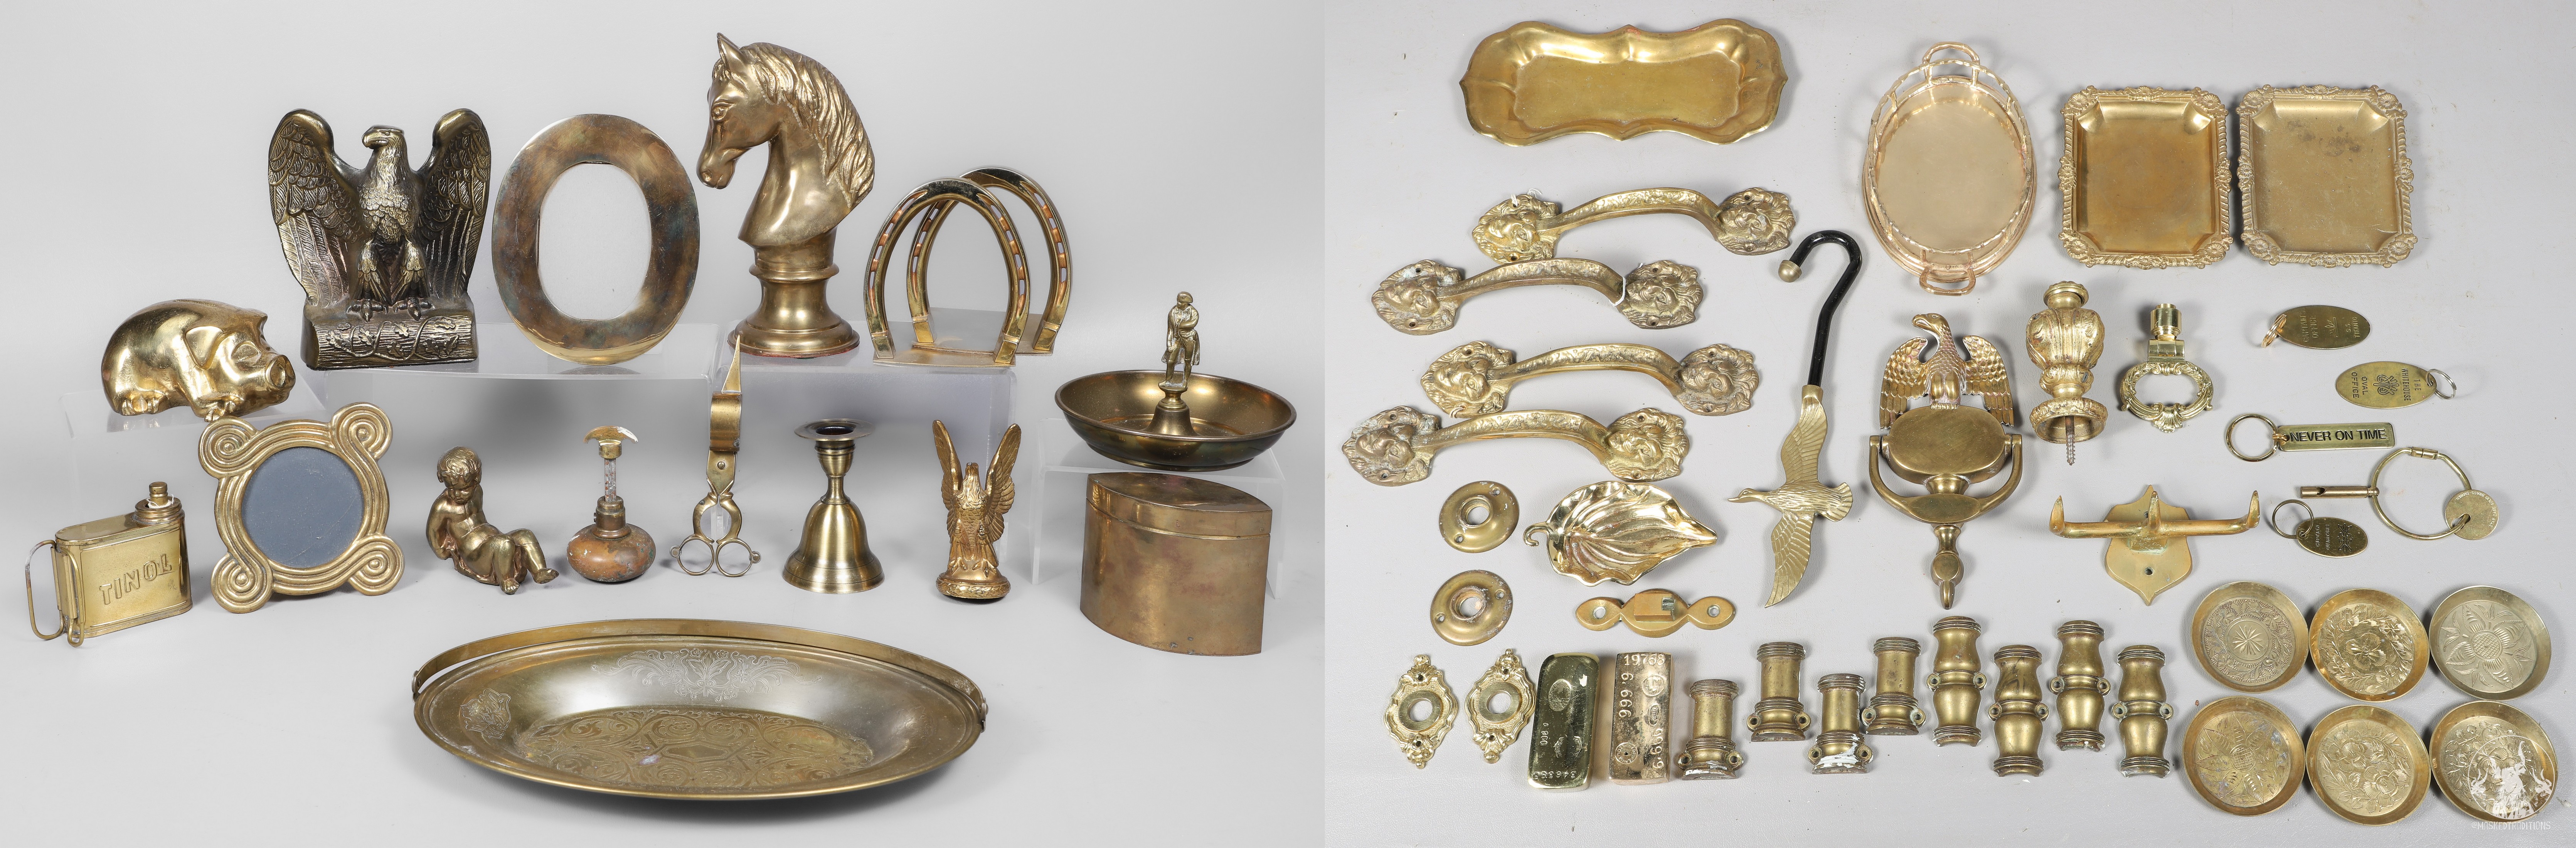 Brass hardware, decorative items to